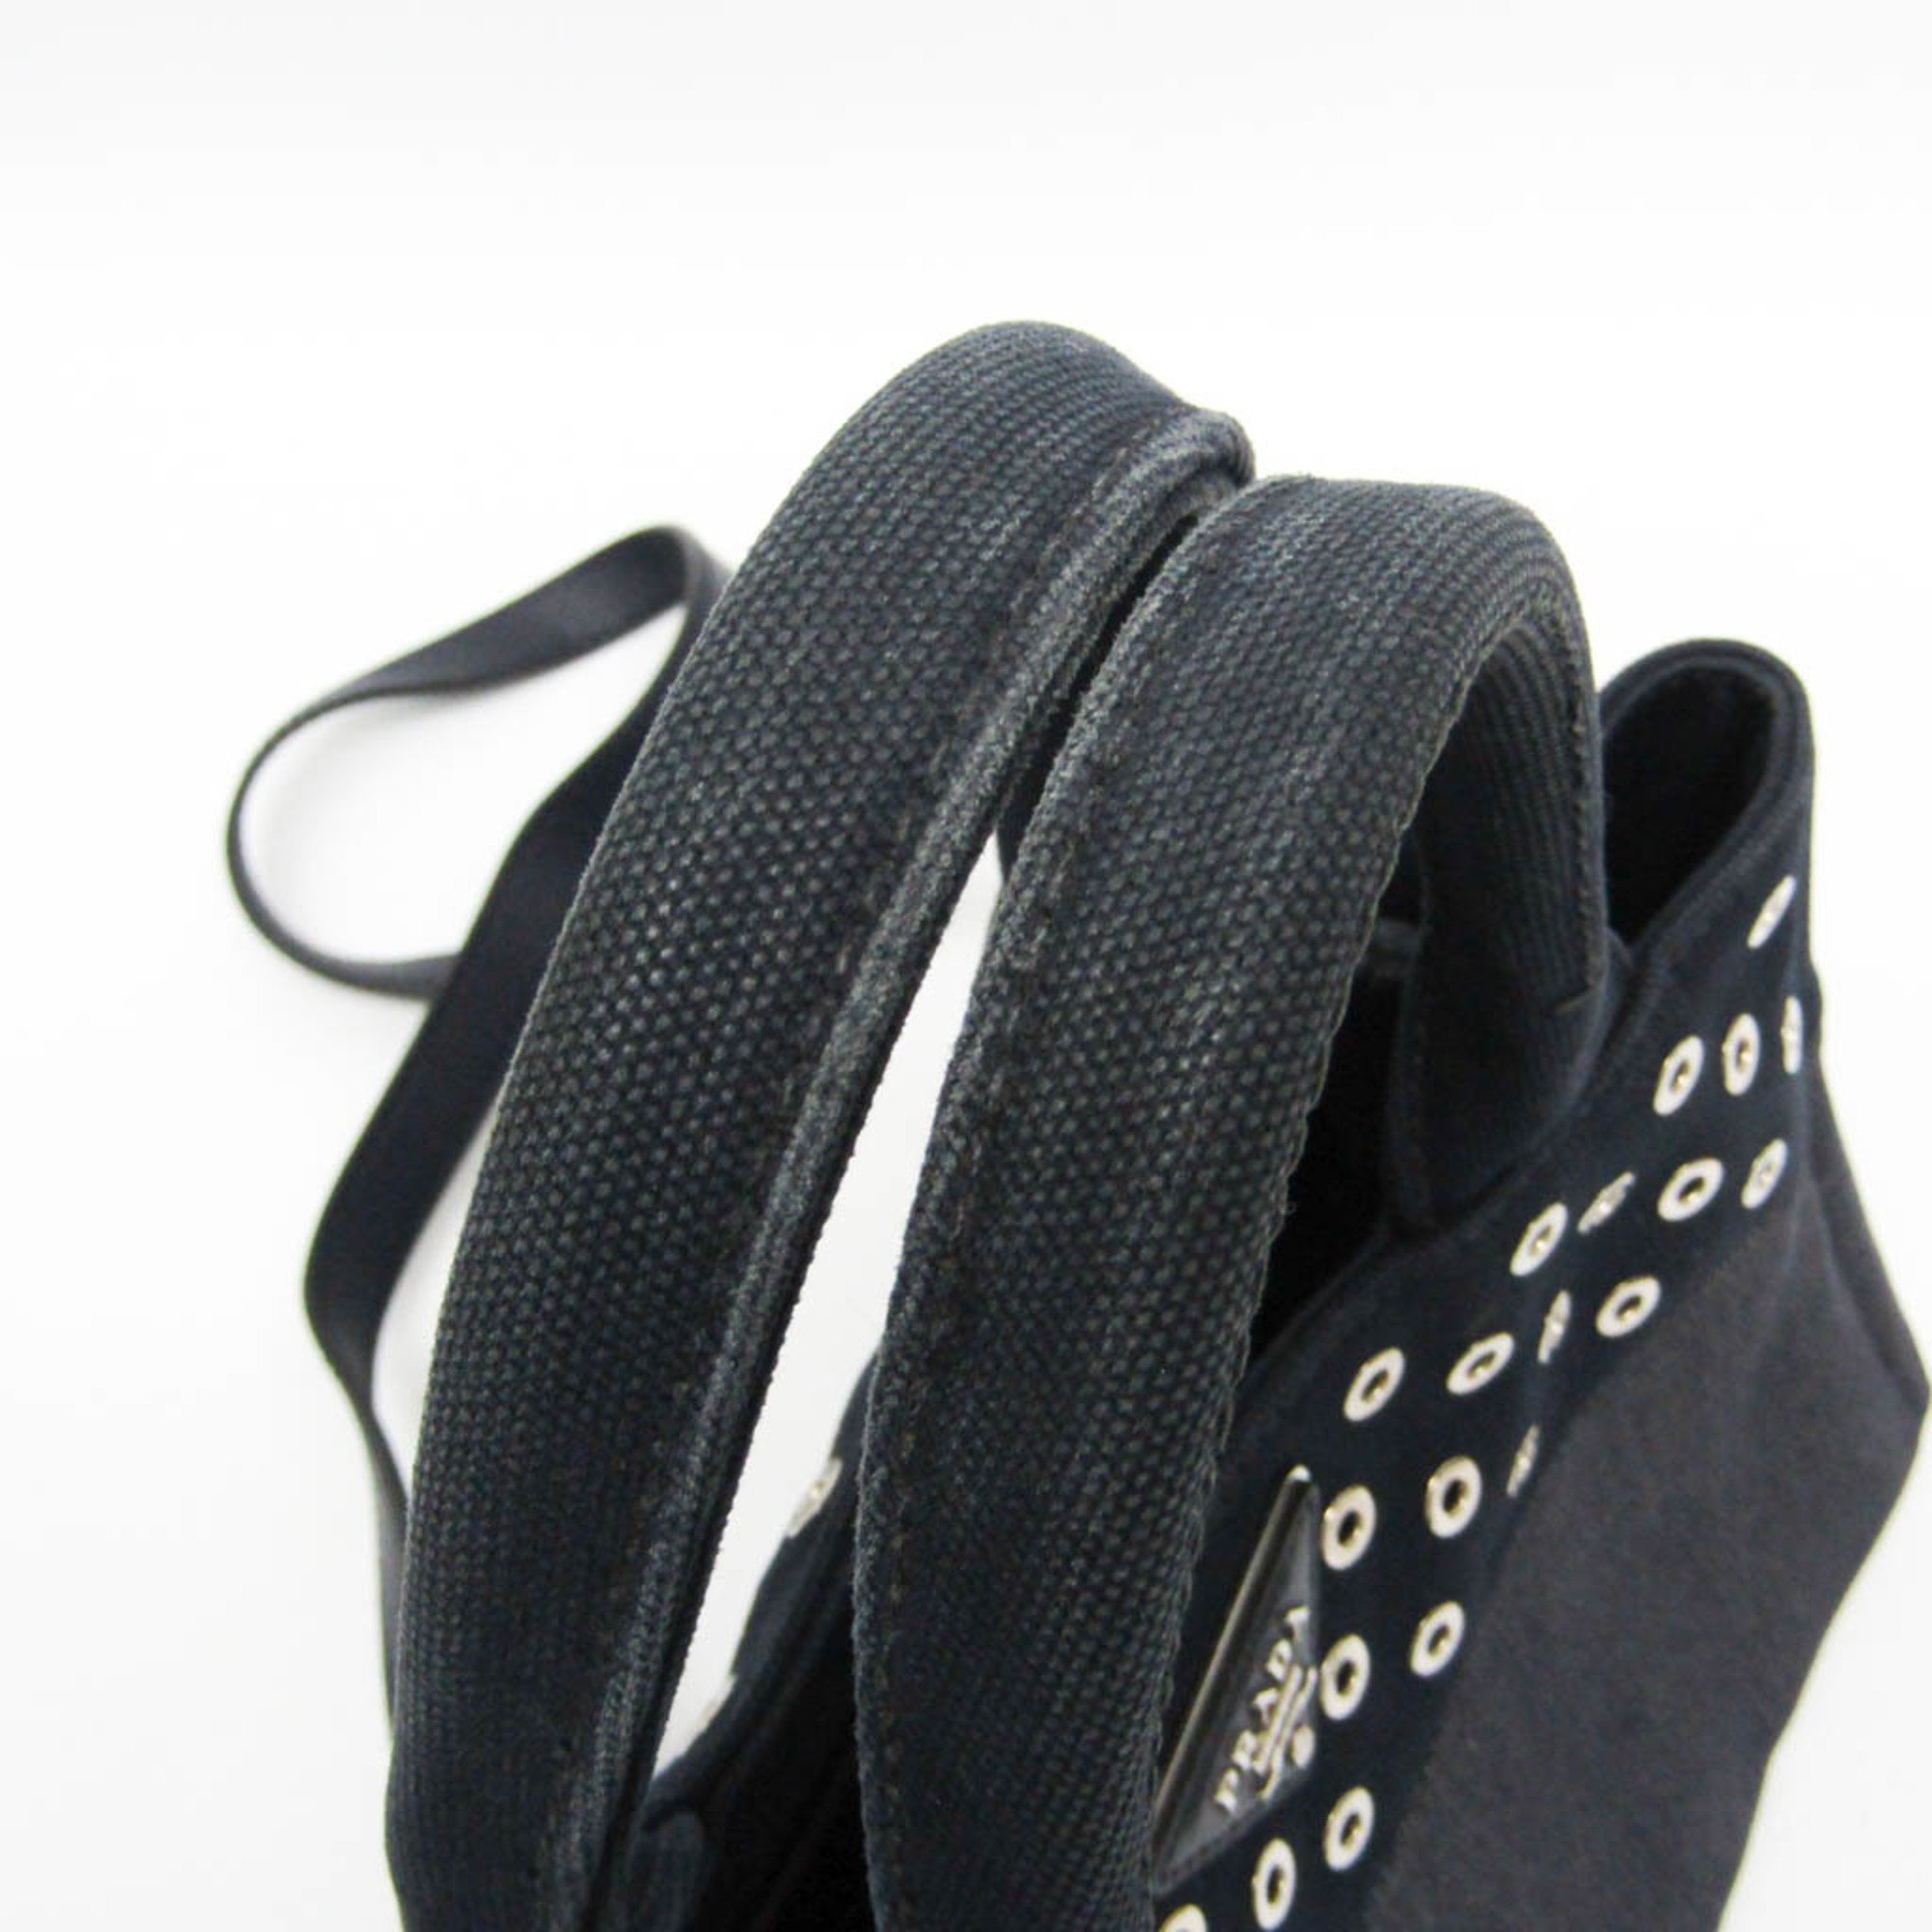 Prada Canapa 1BG439 Women's Denim,Leather Shoulder Bag,Tote Bag Navy